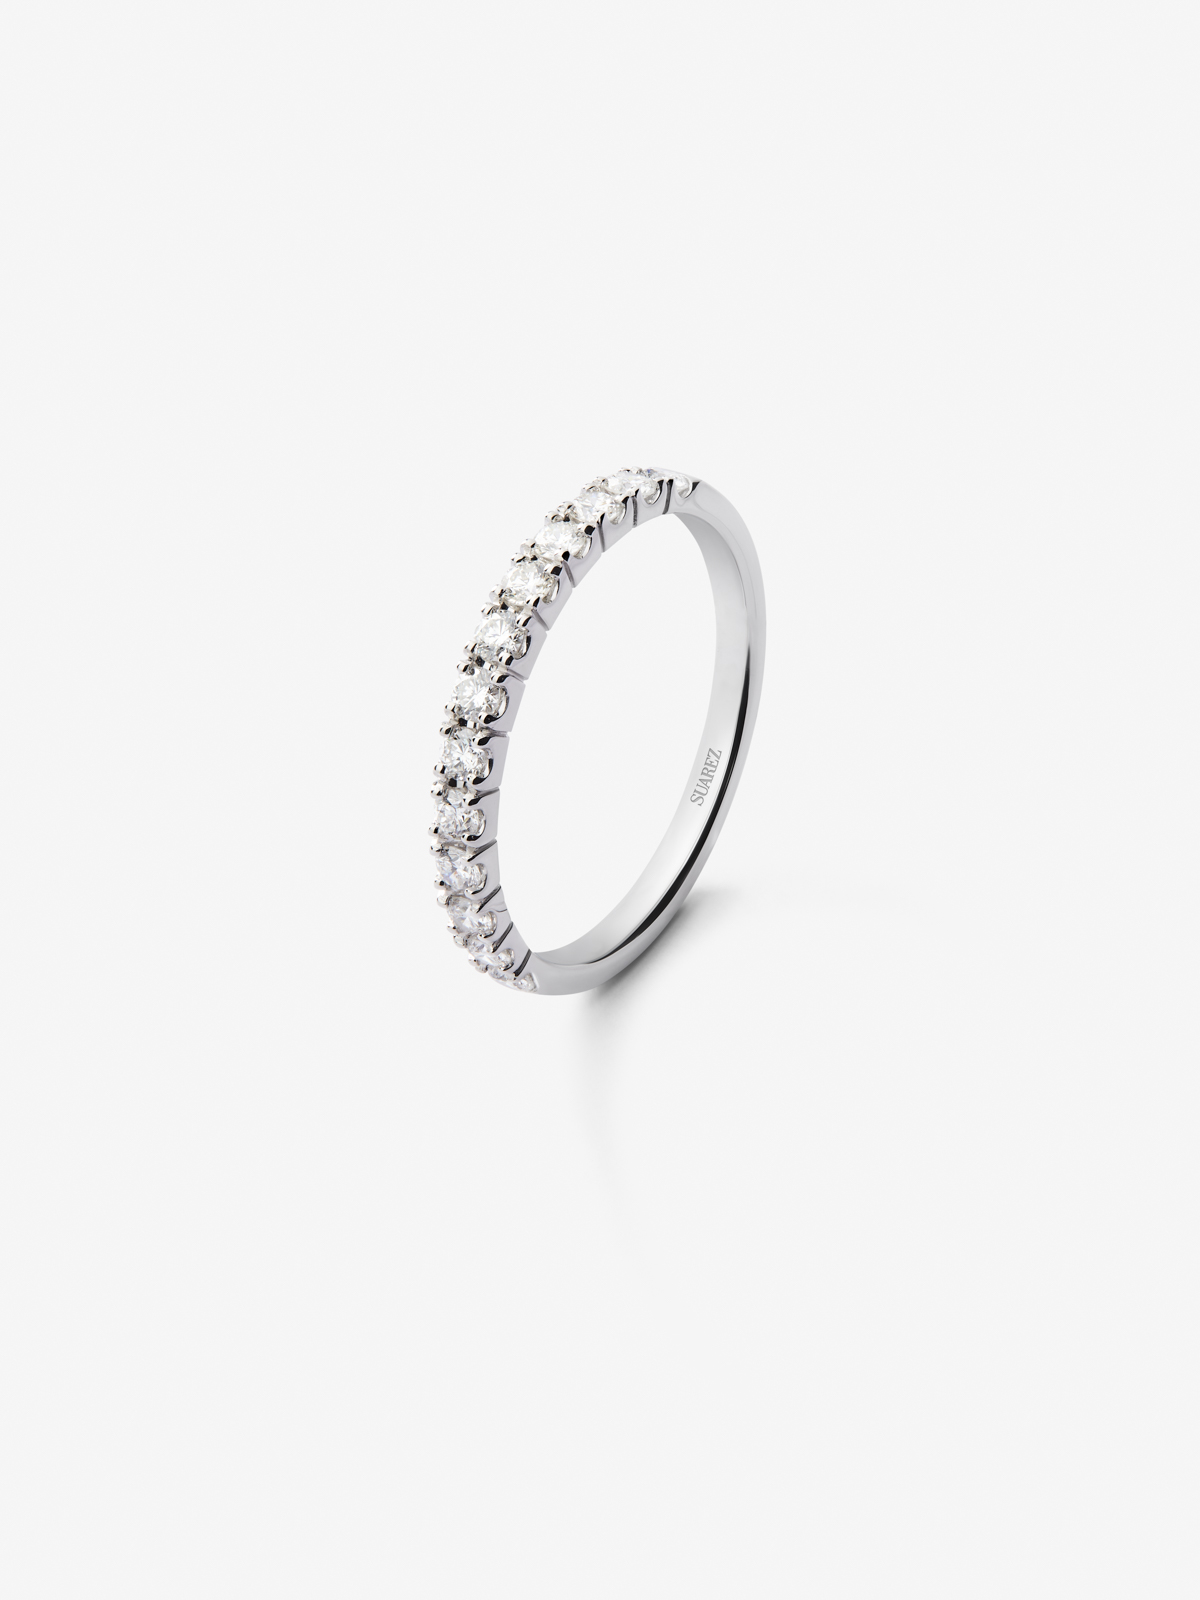 18K white gold medium engagement ring with diamonds